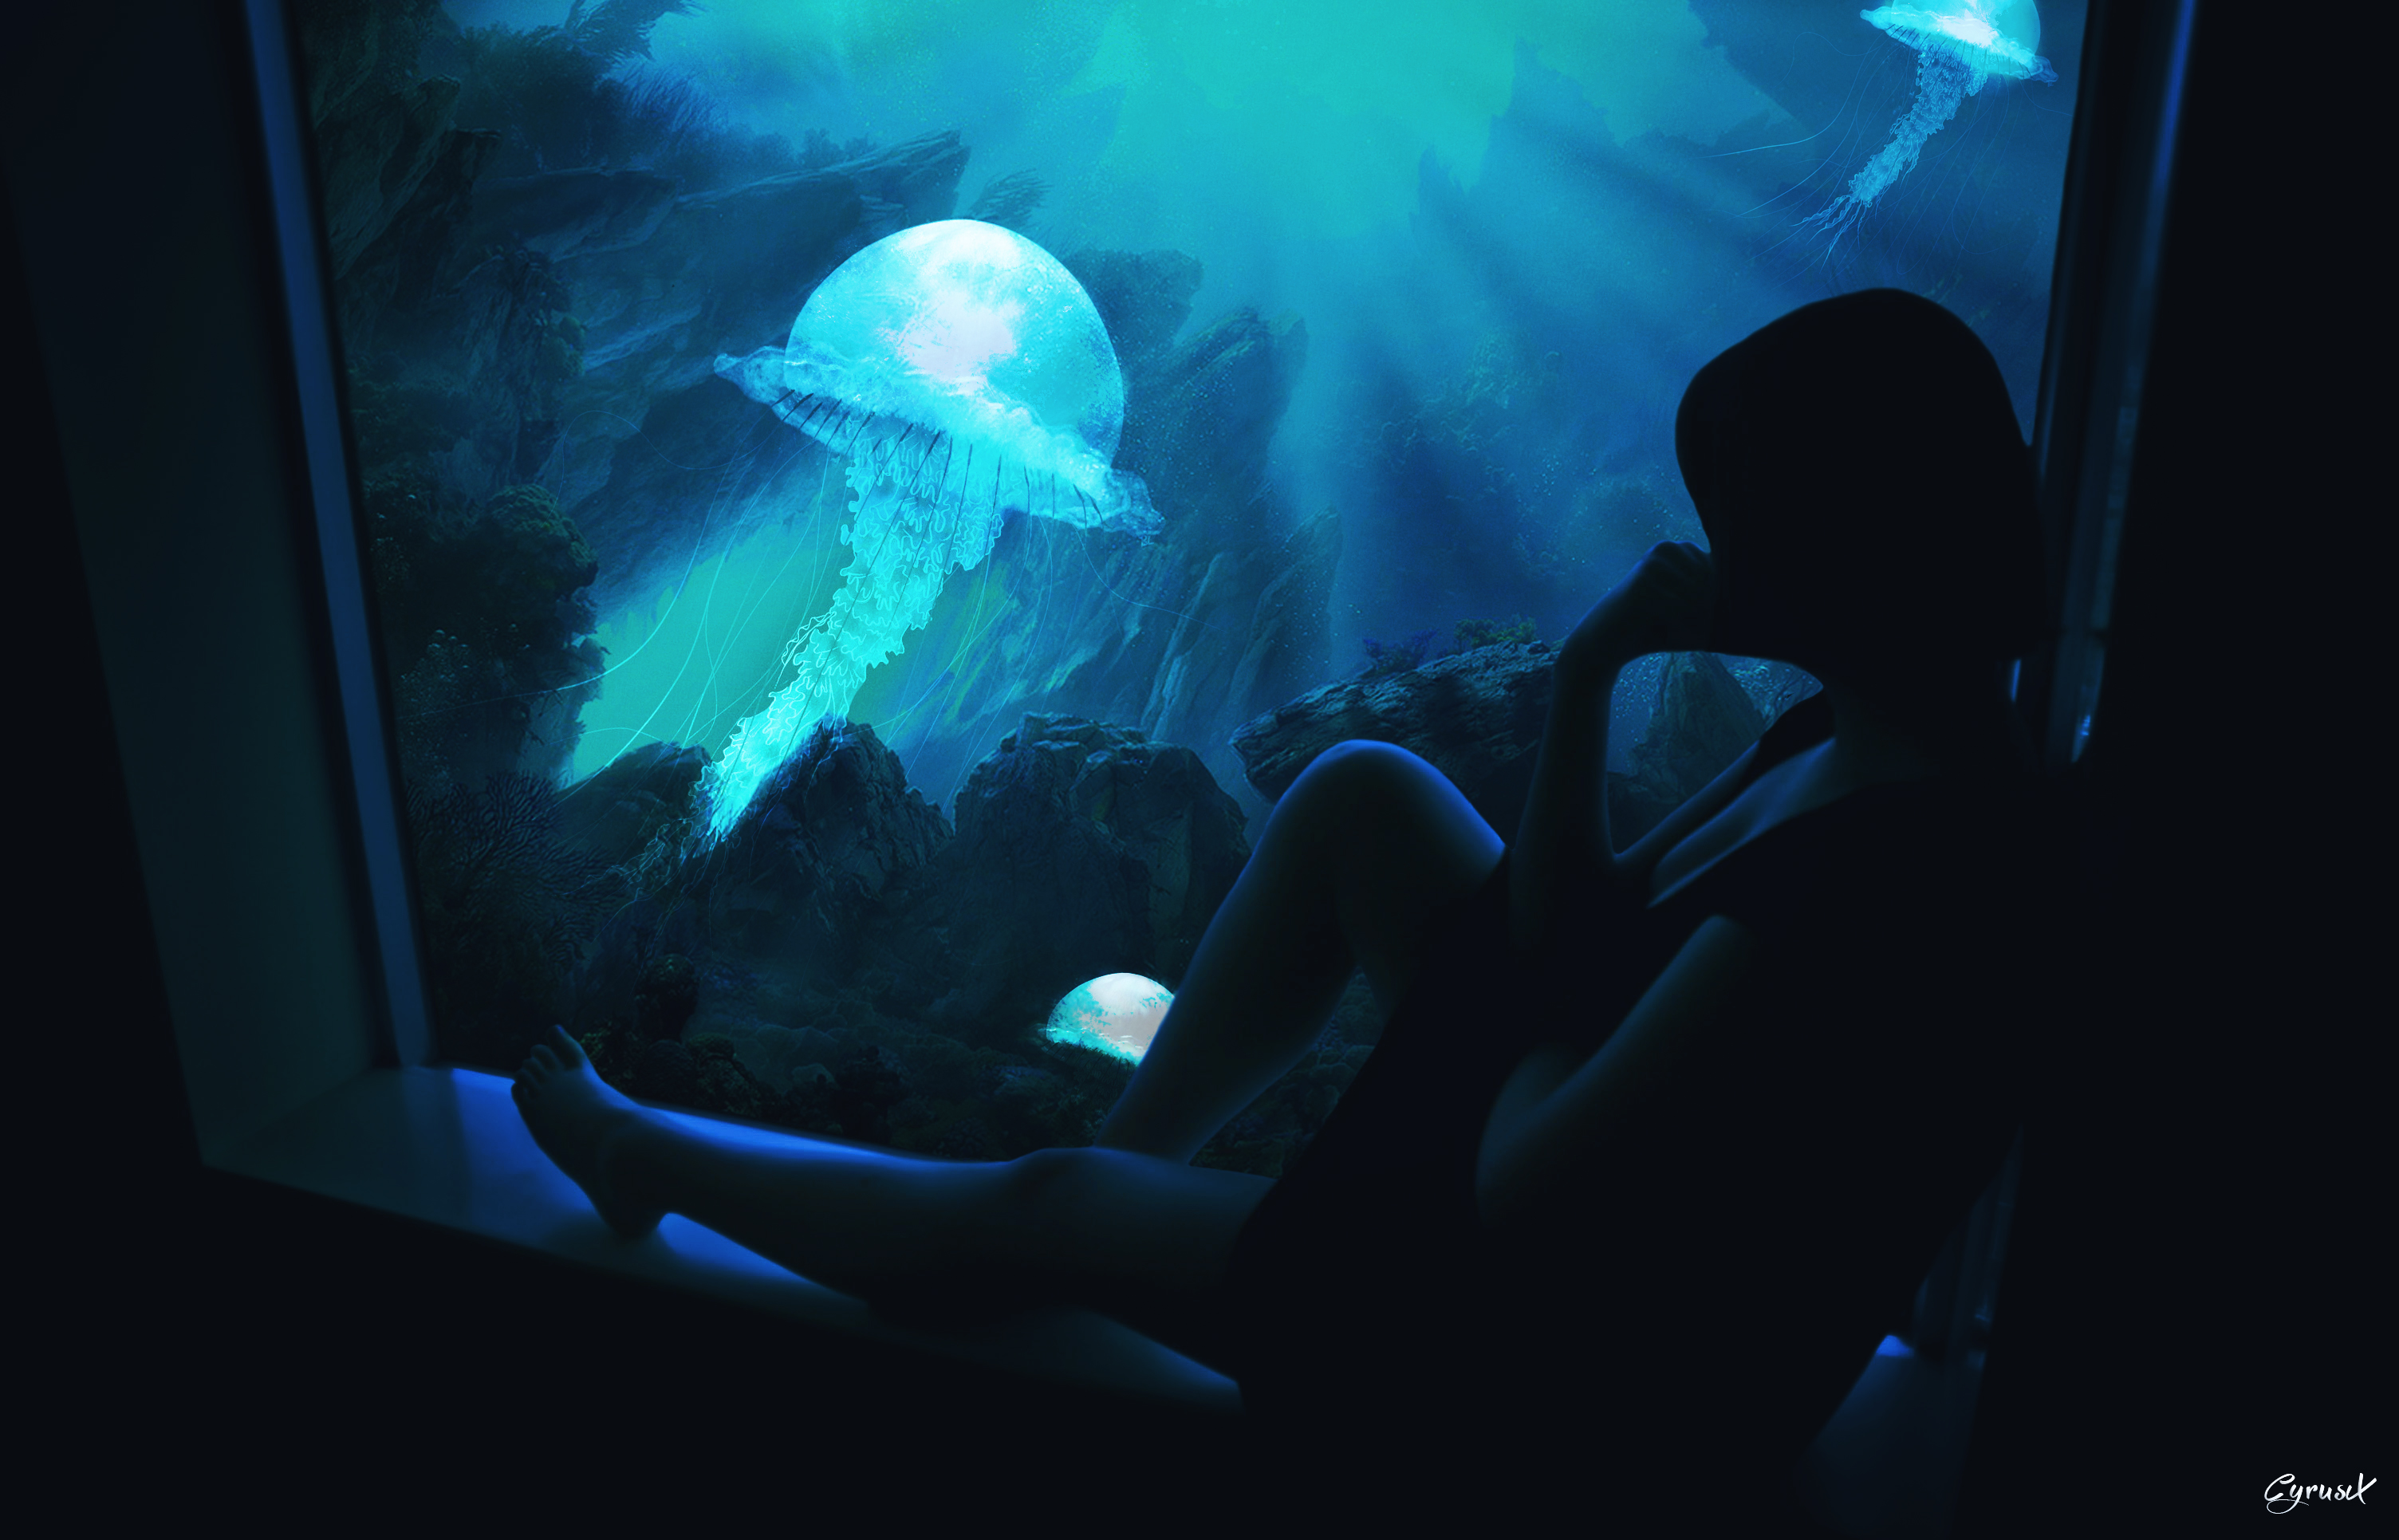 General 3008x1931 imagination alone thinking blue cyan jellyfish dark high angle digital art low light signature animals